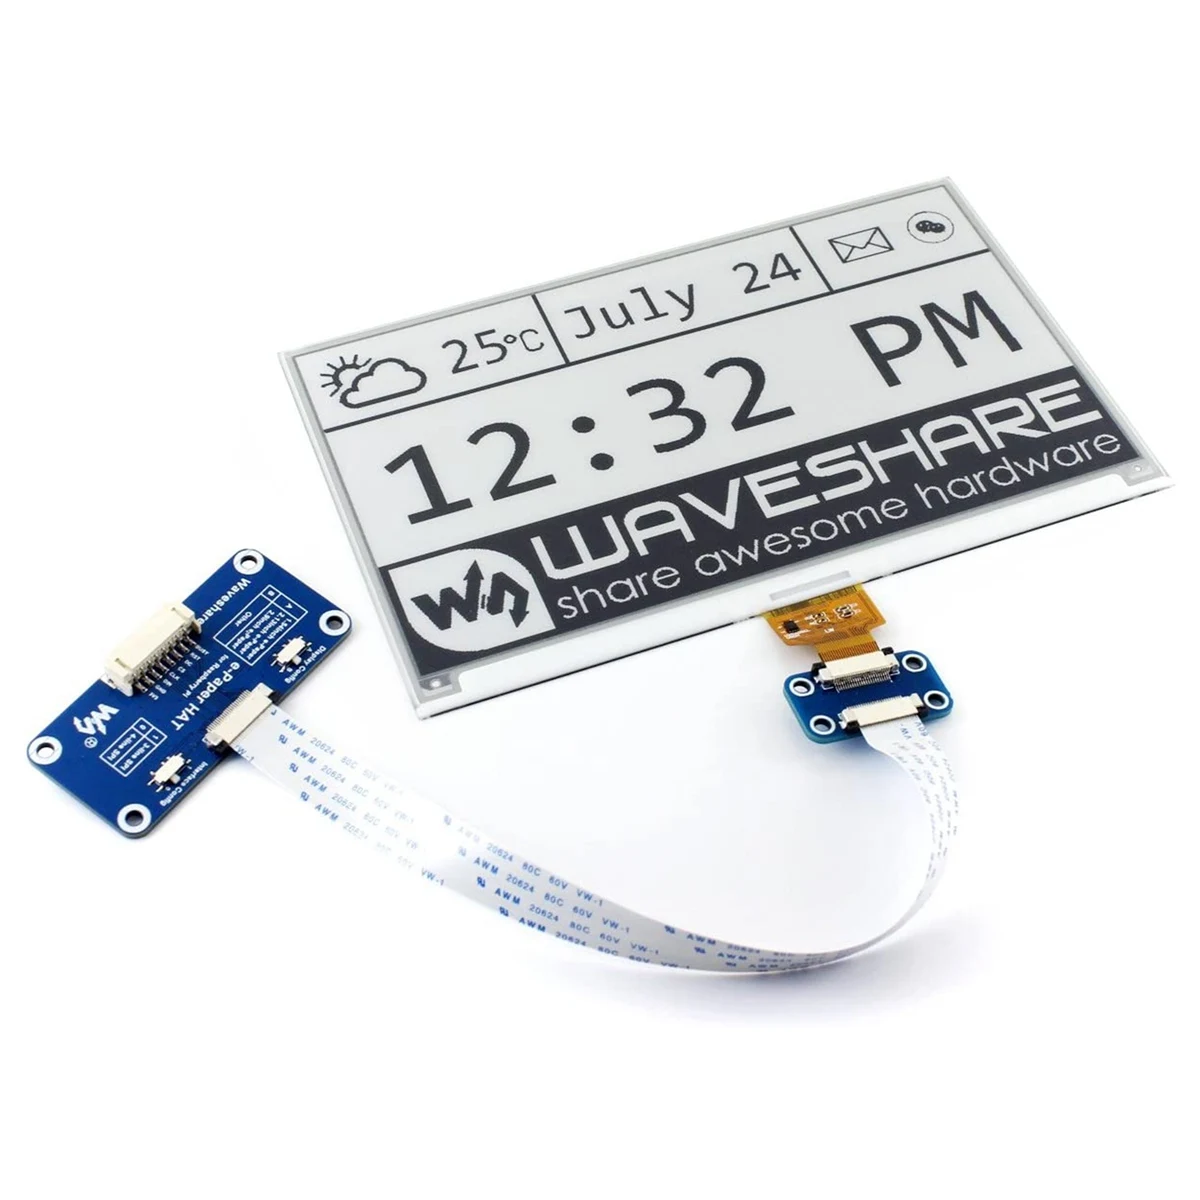 

Waveshare 7.5Inch Epaper Eink E Ink Screen Display Monitor HAT Starter Kit for Arduino RPI Raspberry Pi Zero 2 W WH 2W 3B Plus